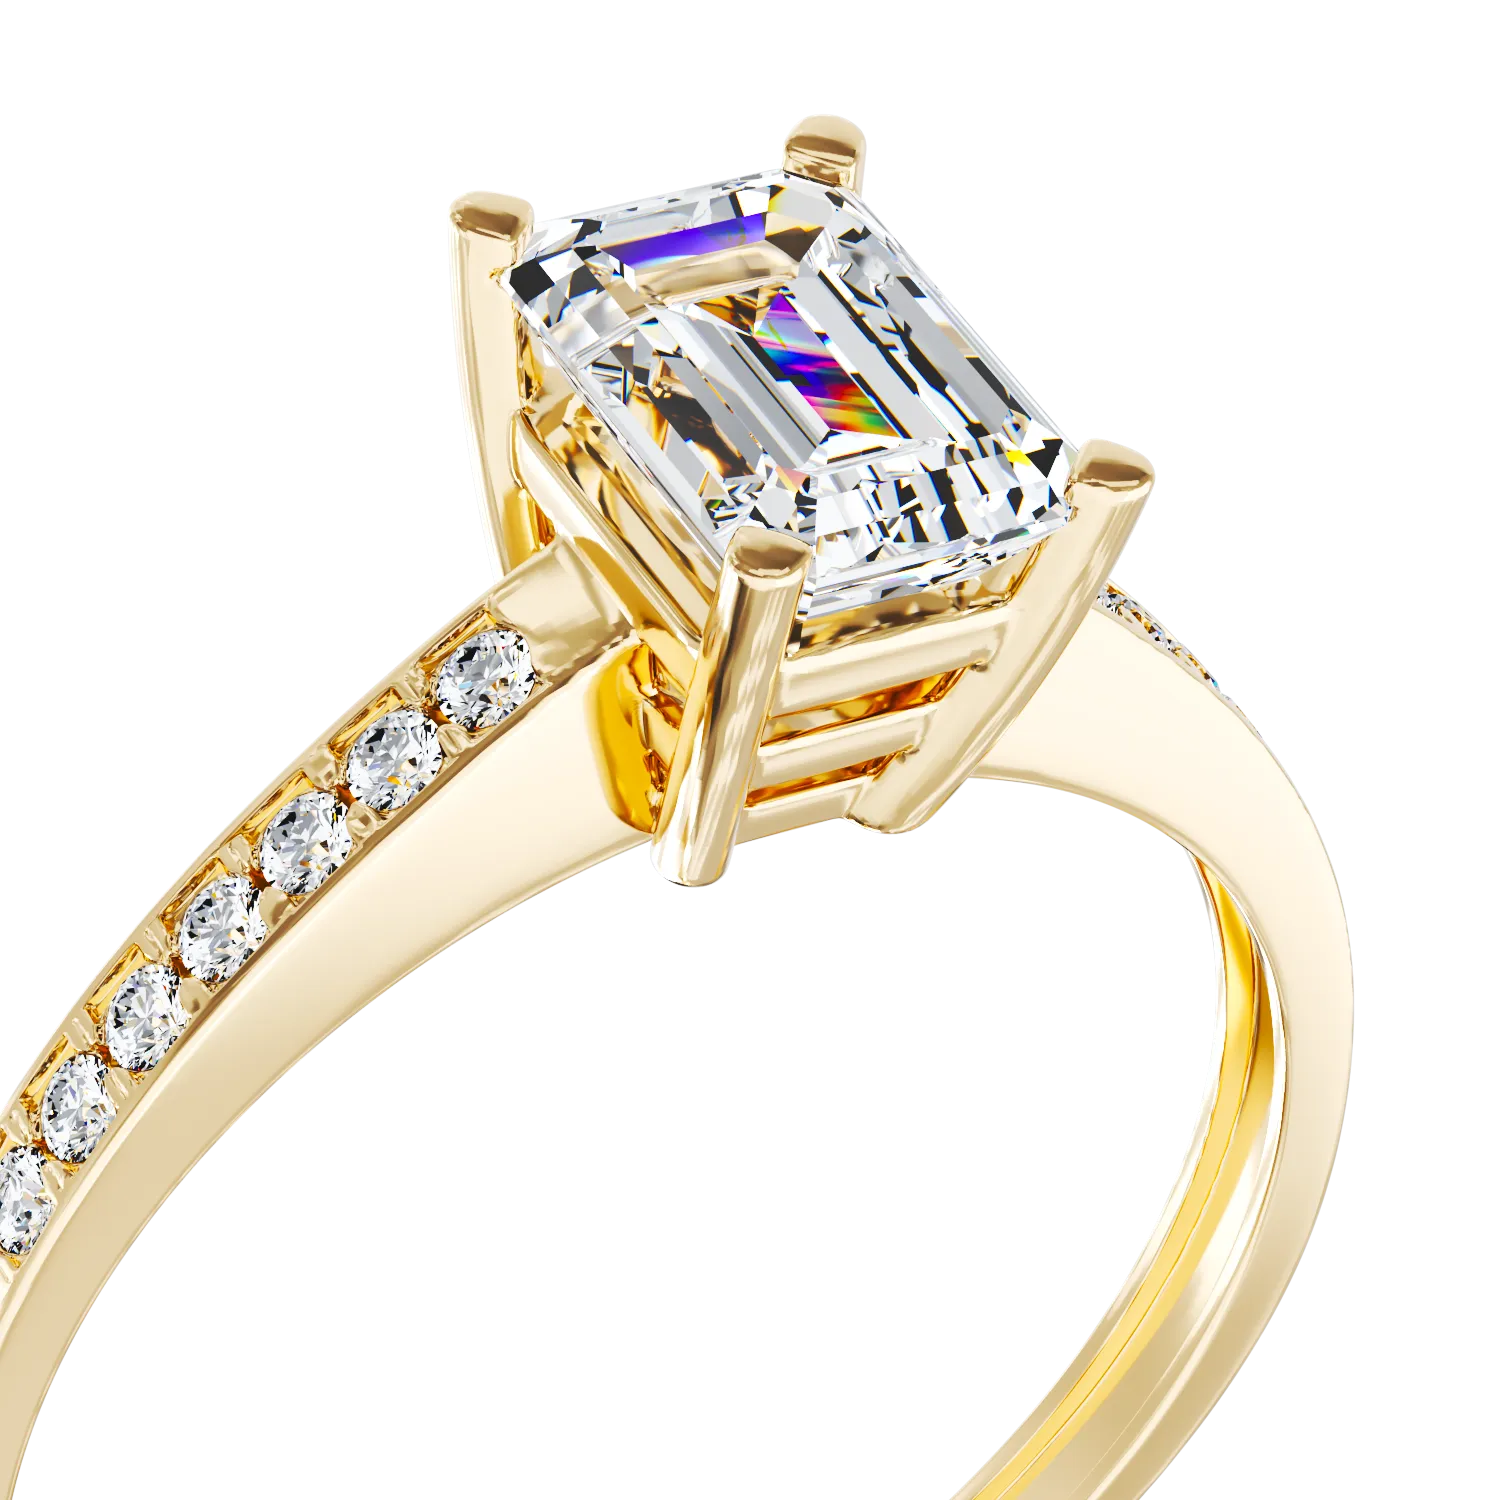 14K yellow gold engagement ring